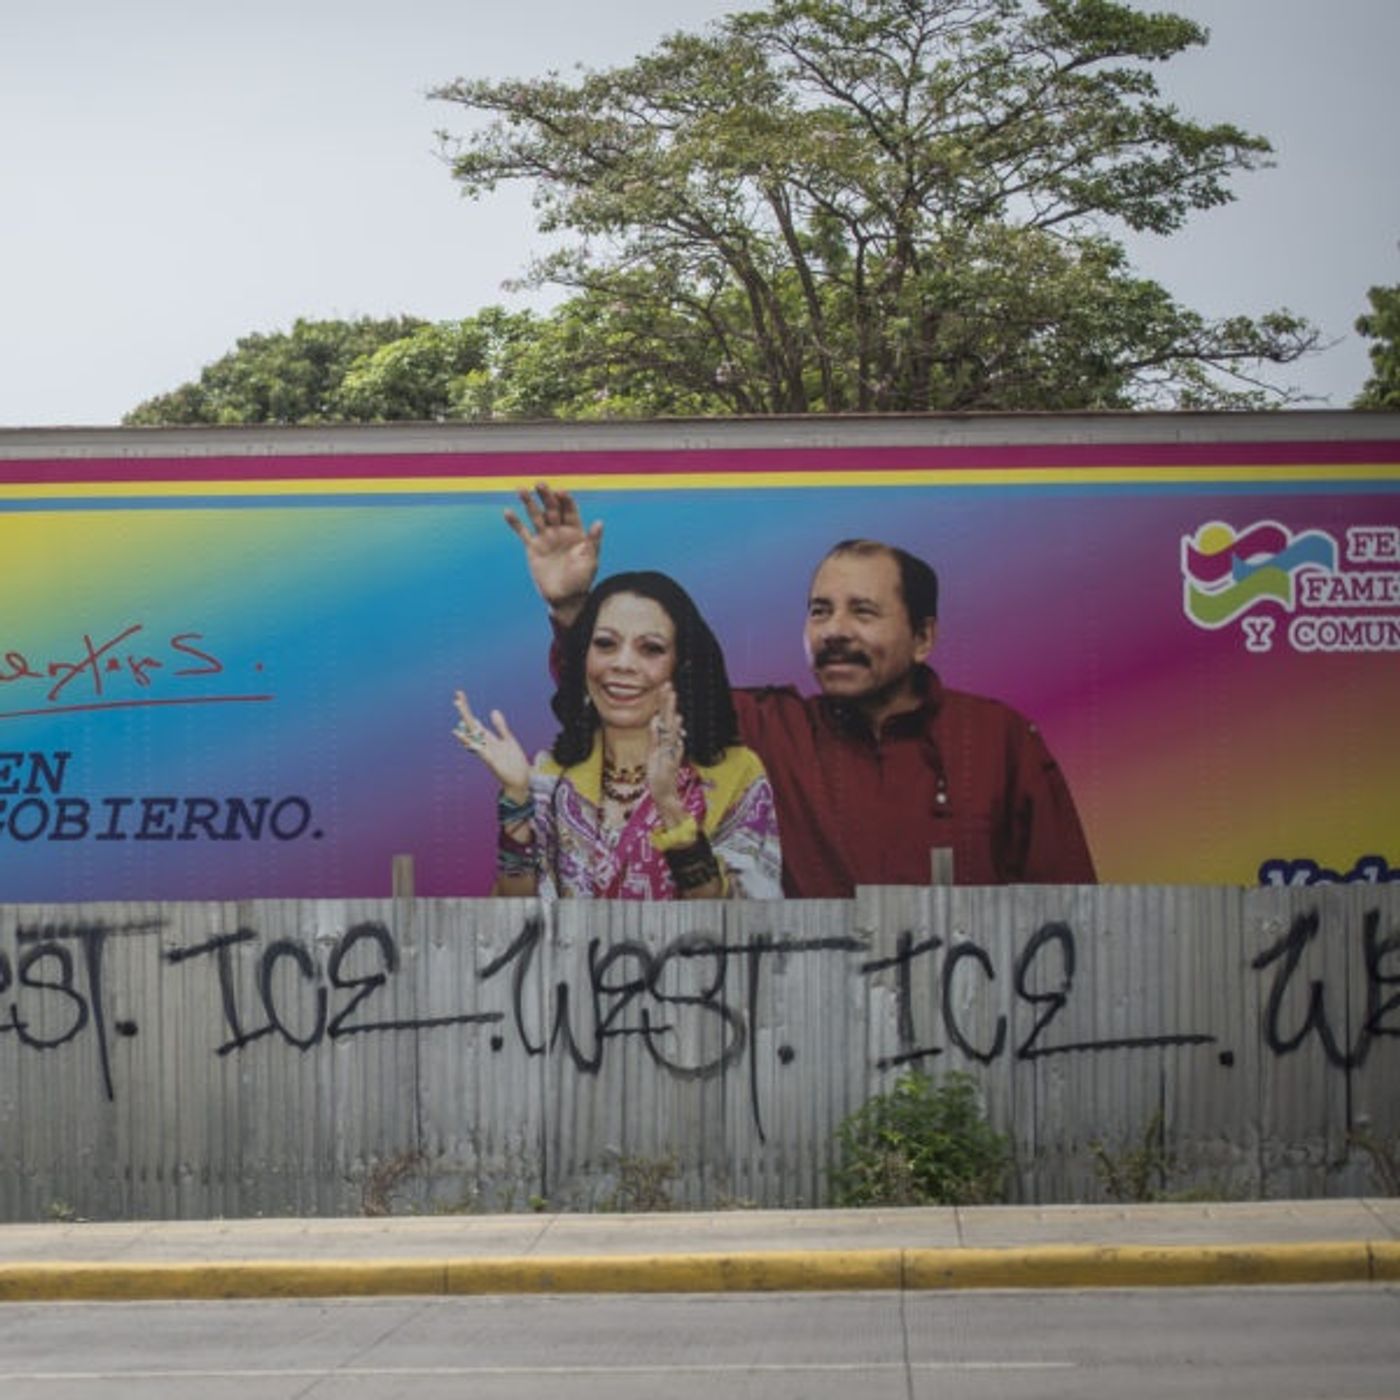 Ortega encamina a Nicaragua hacia un peligroso aislamiento internacional similar al de Venezuela